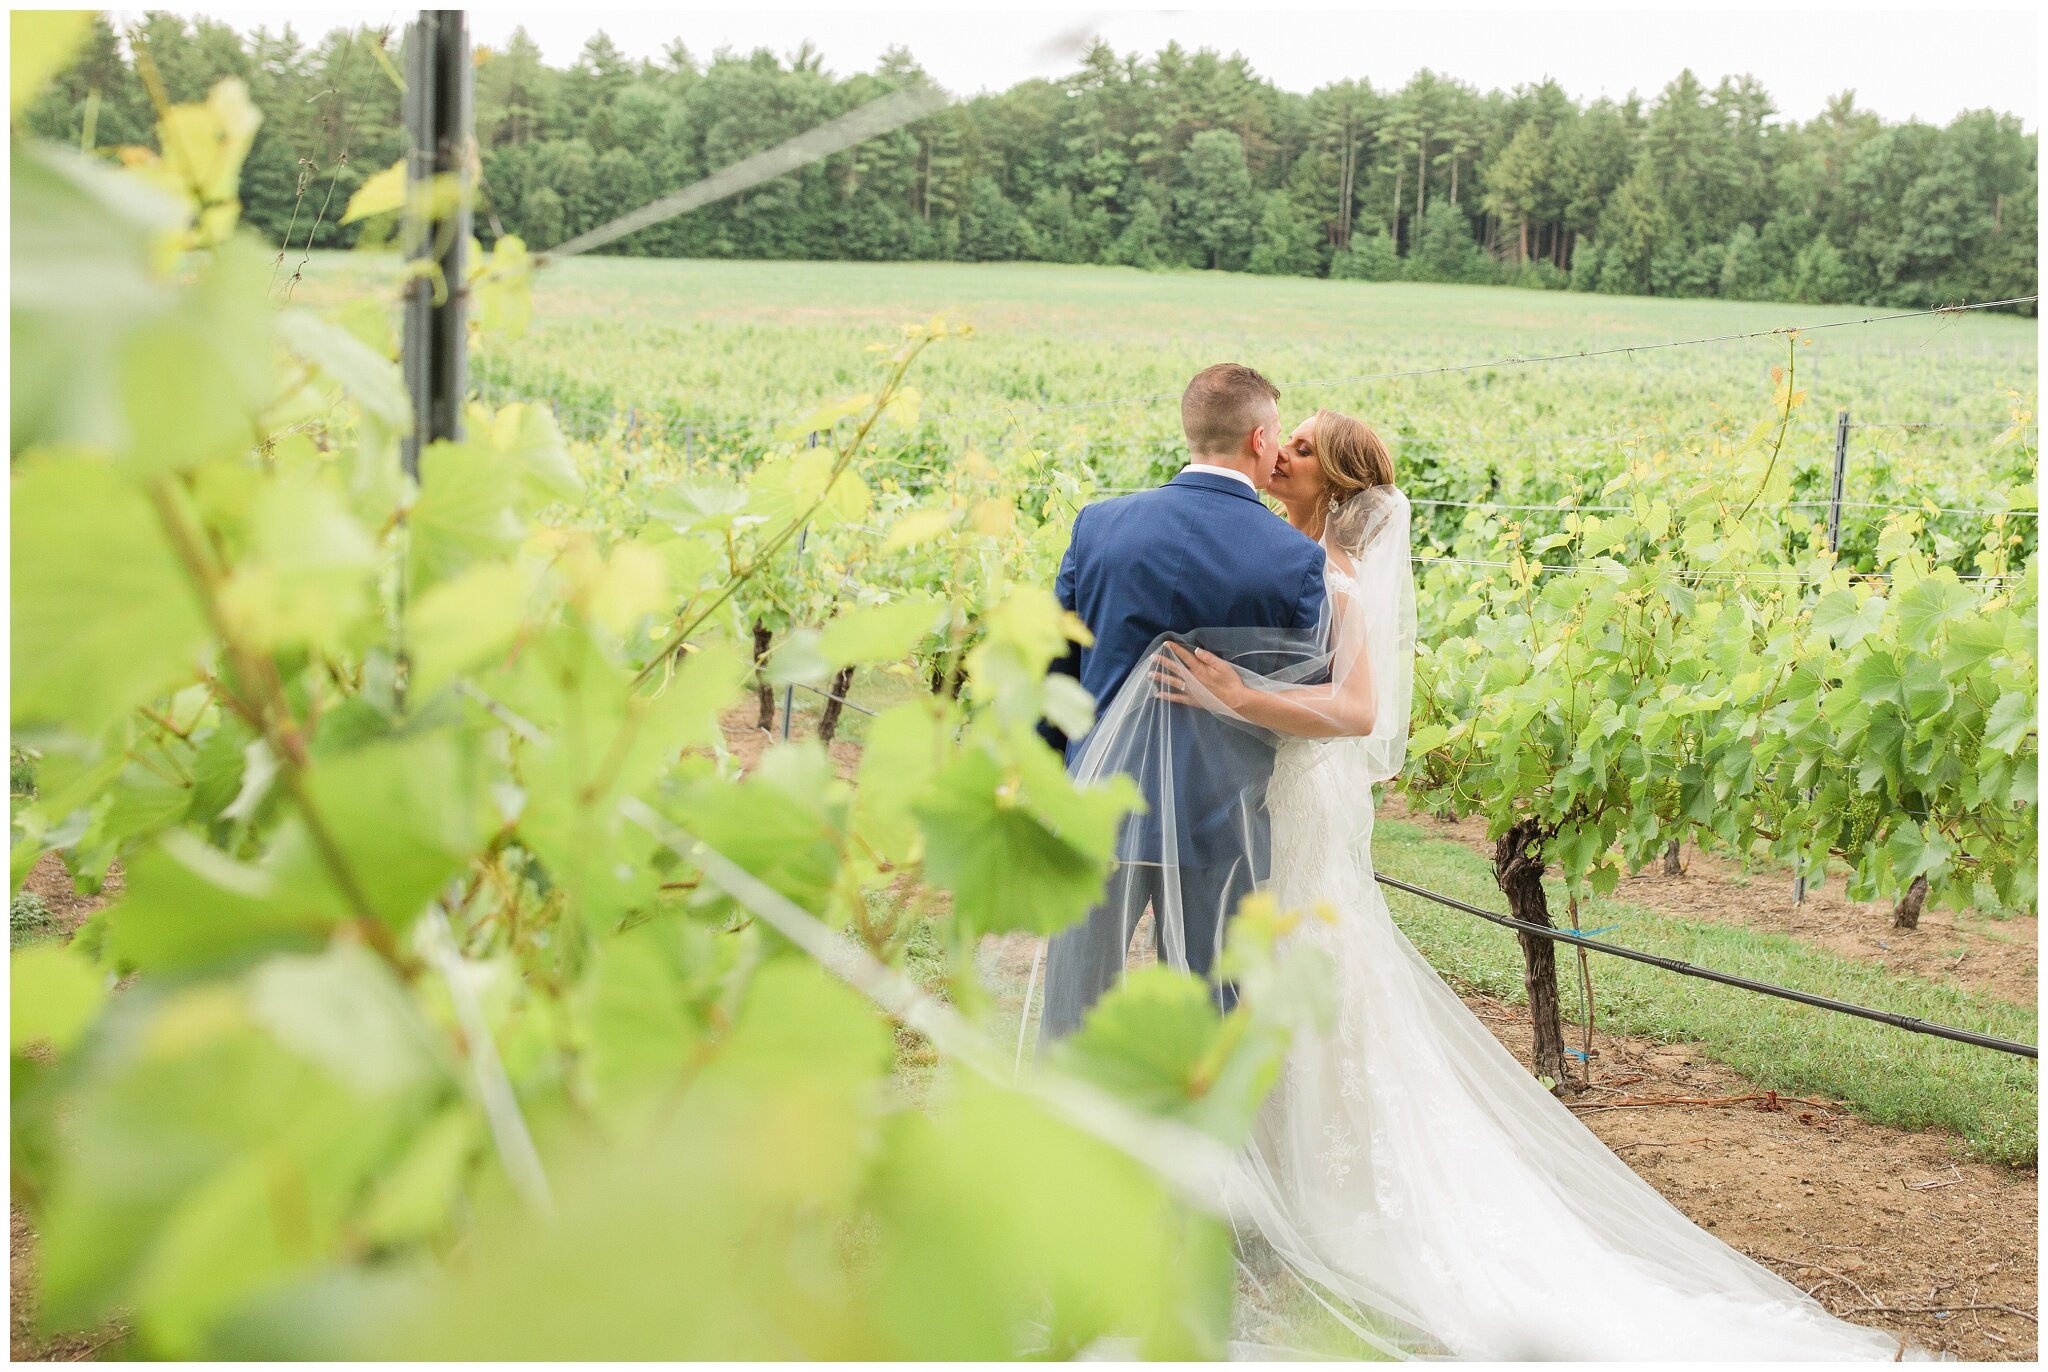 nh summer wedding at winery - rivercrest villas prep hotel location